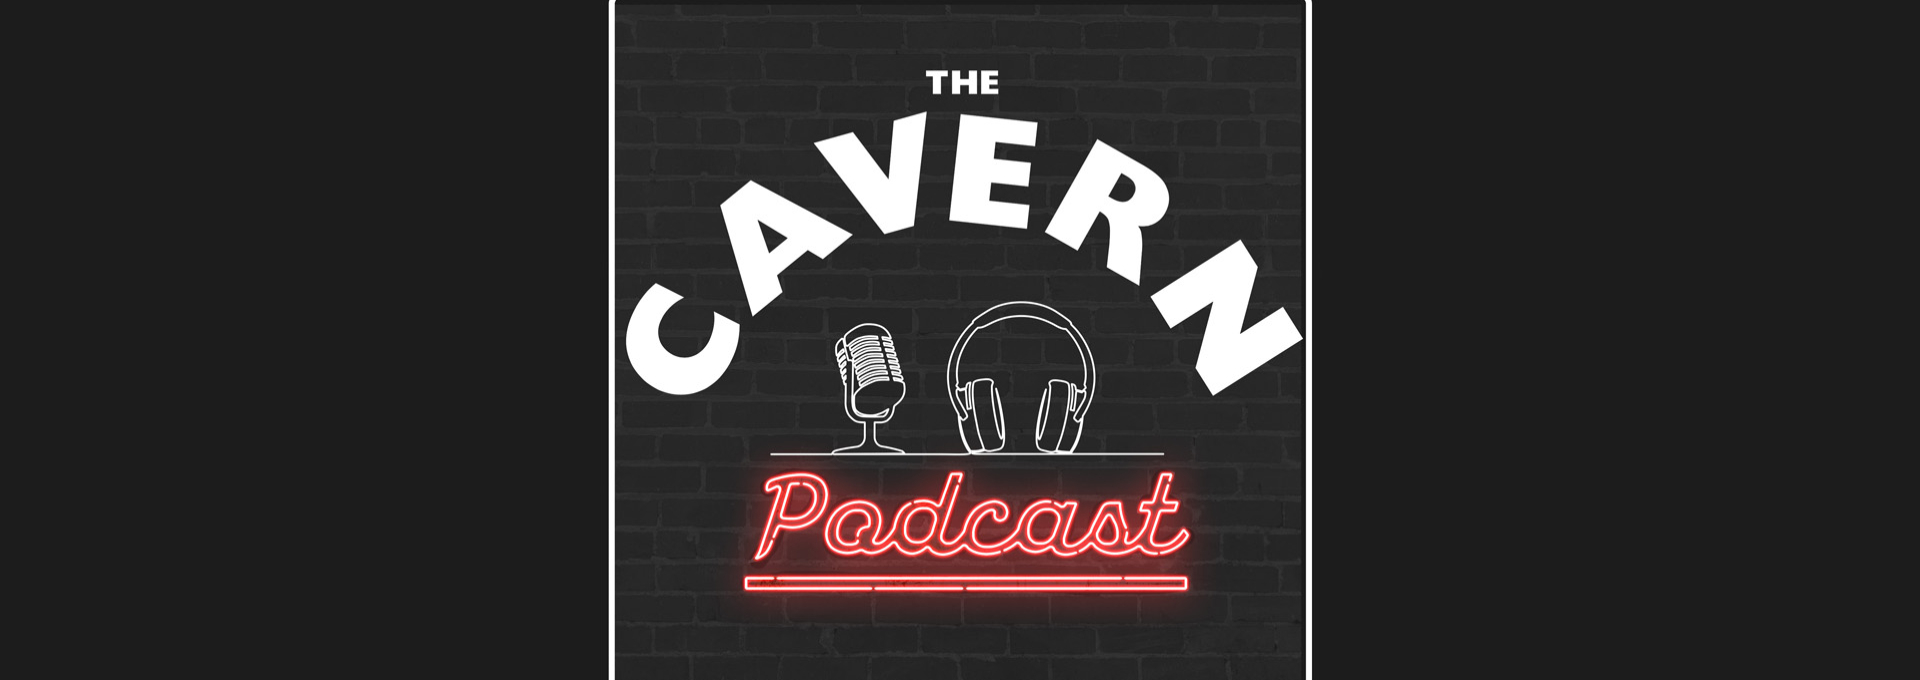 The Cavern Club Podcast